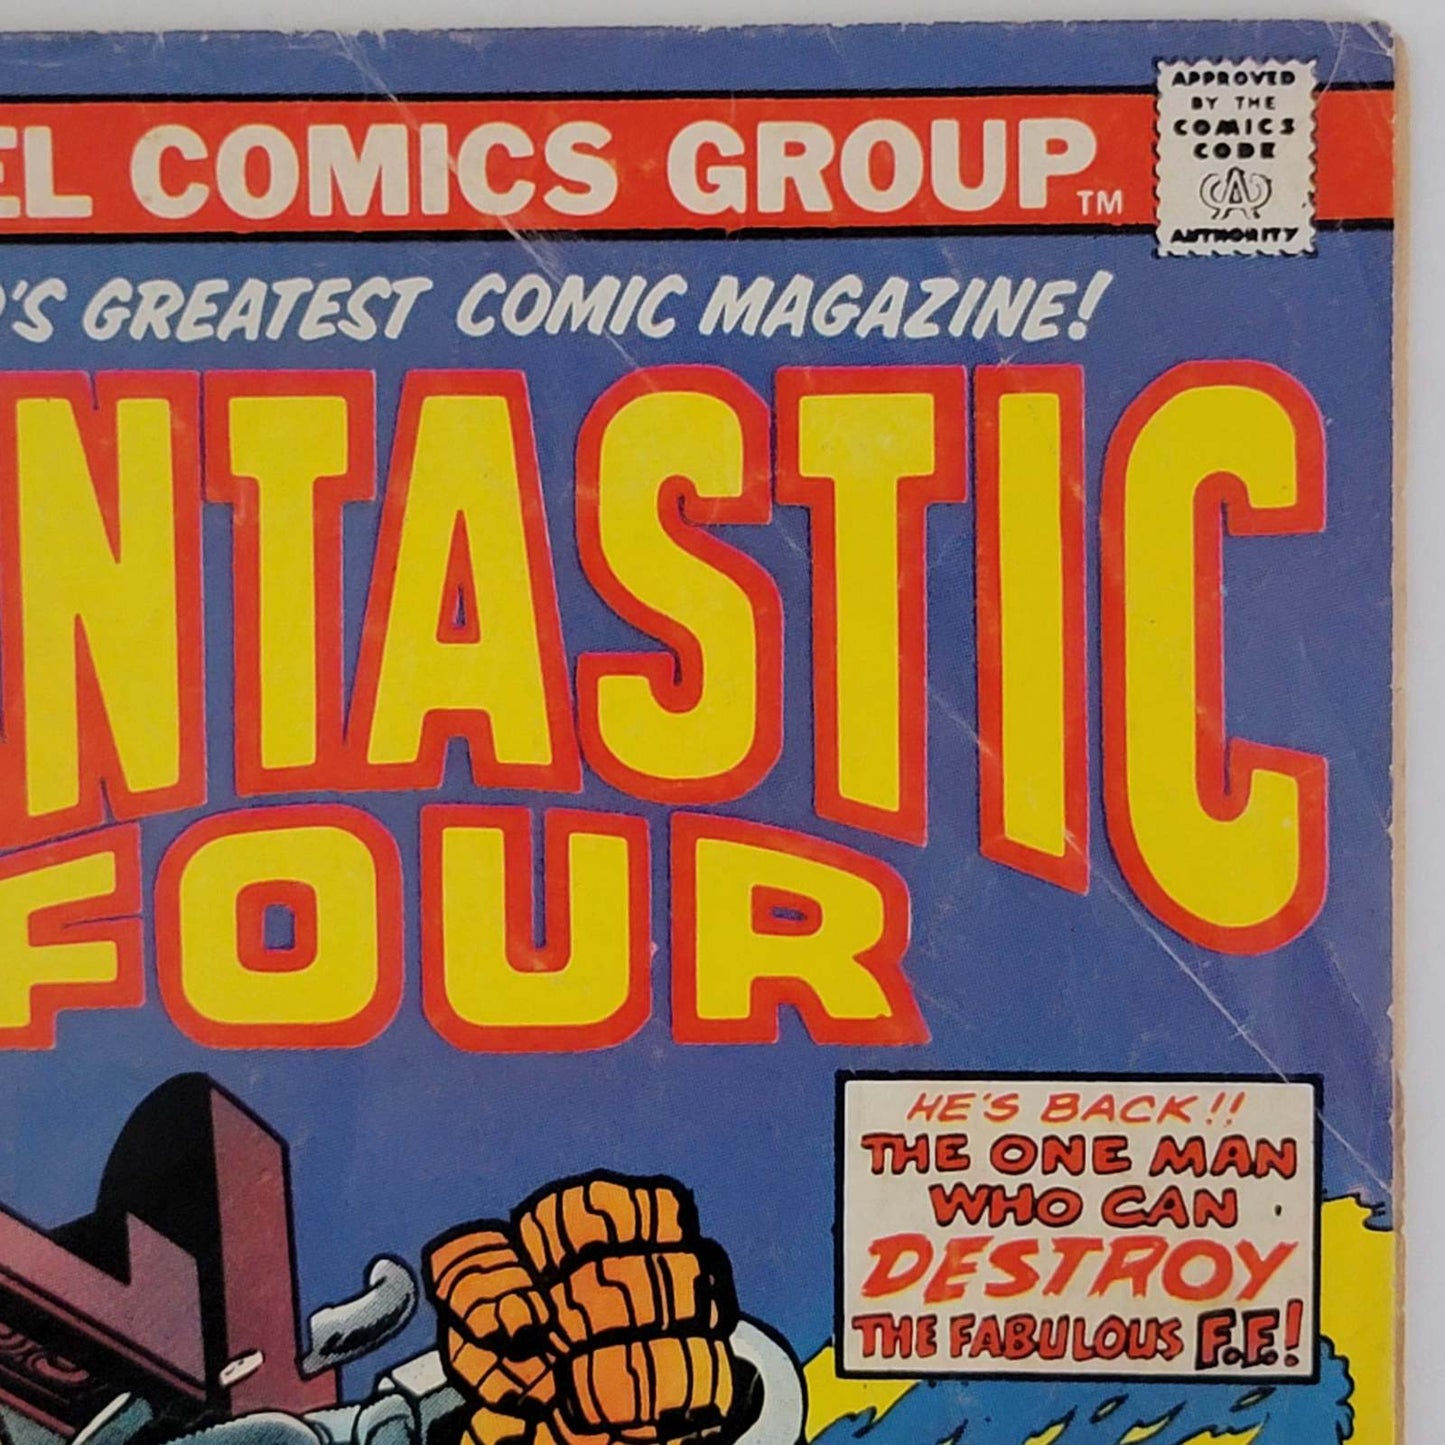 Fantastic Four #143